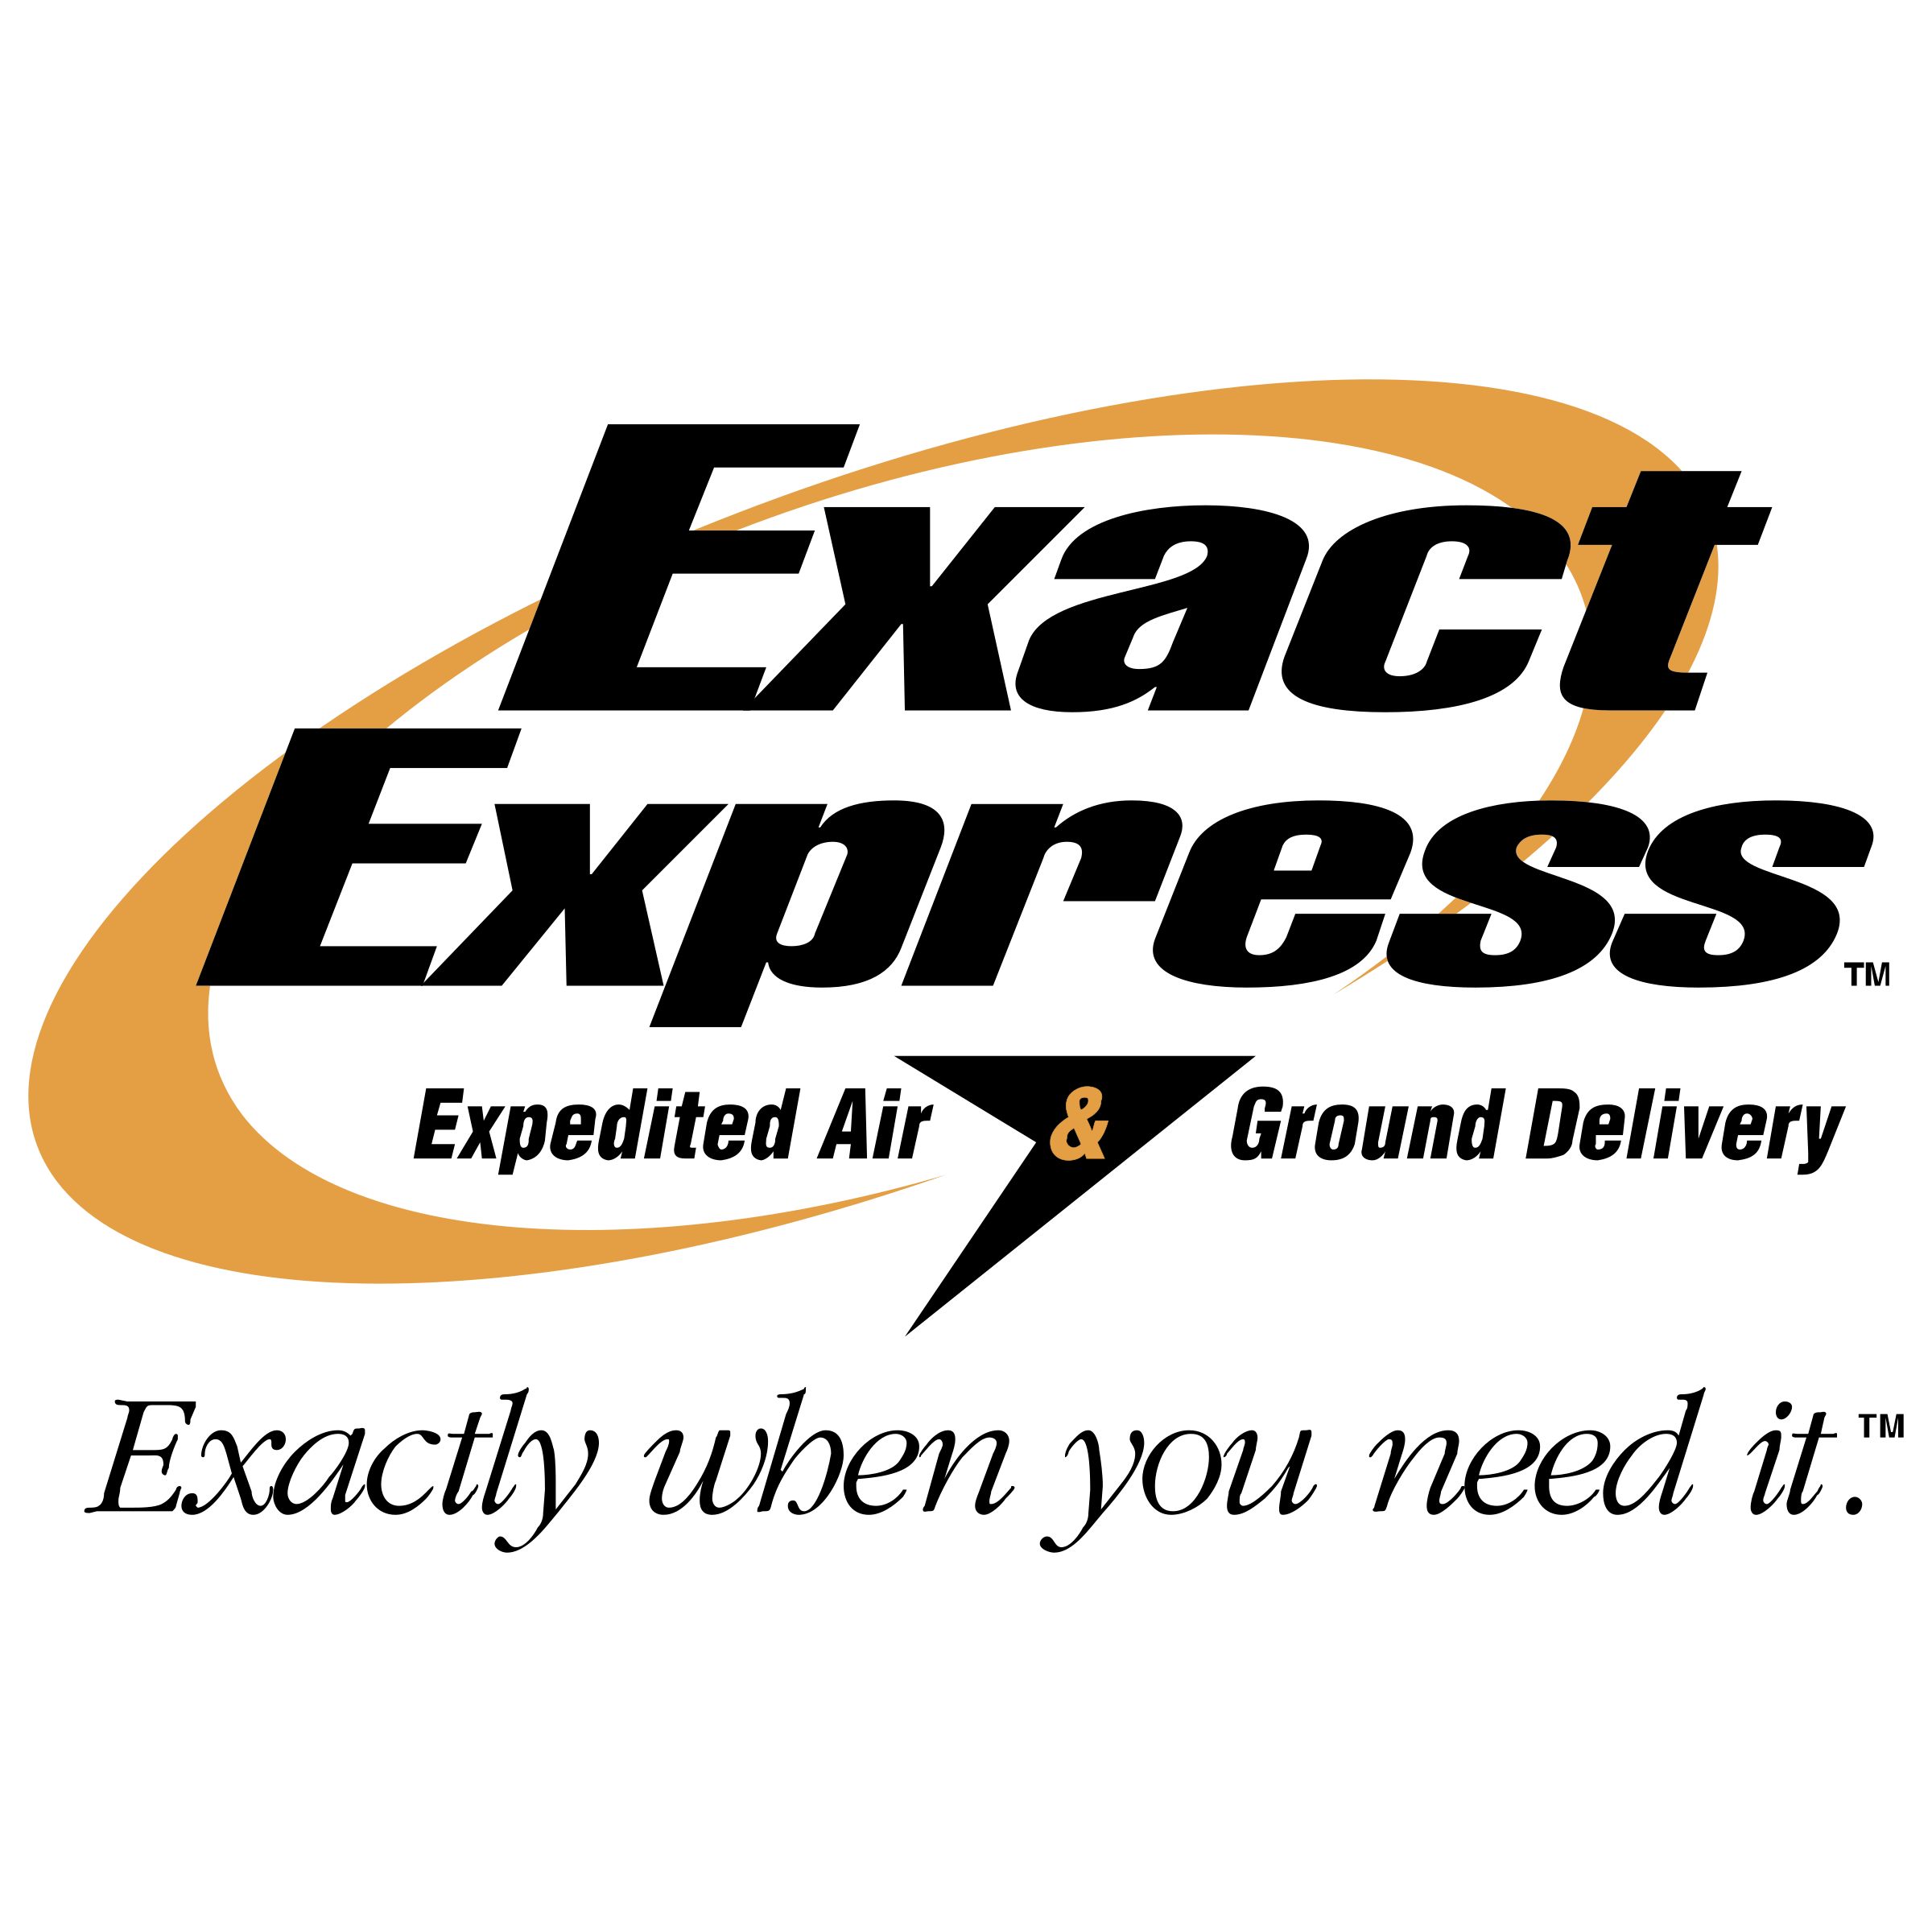 Exact Logo - Exact Express Logo PNG Transparent & SVG Vector - Freebie Supply